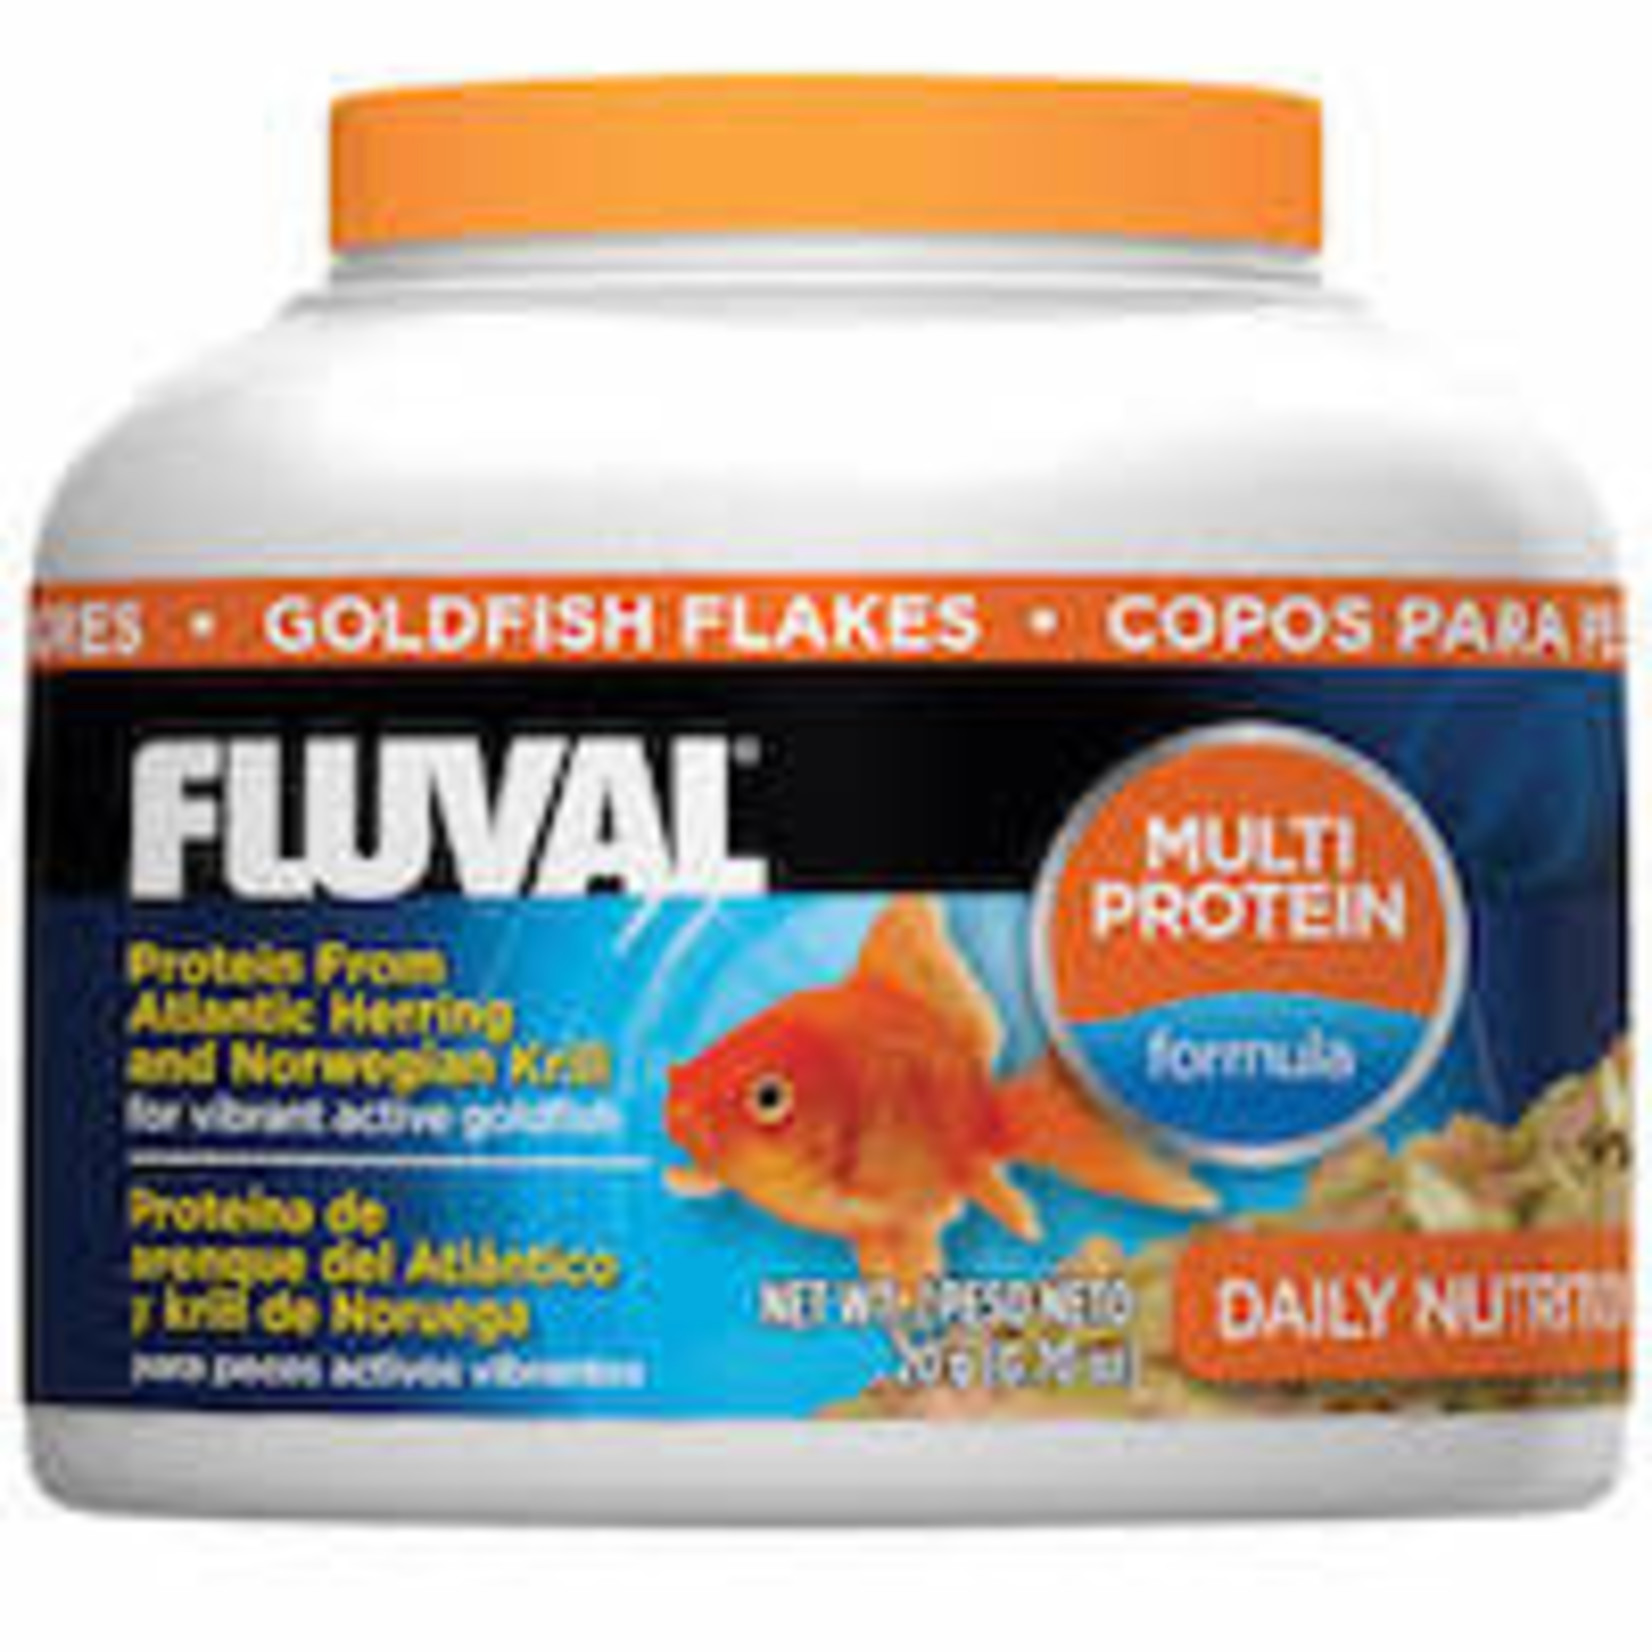 Fluval Fluval Goldfish Flakes 0.7oz